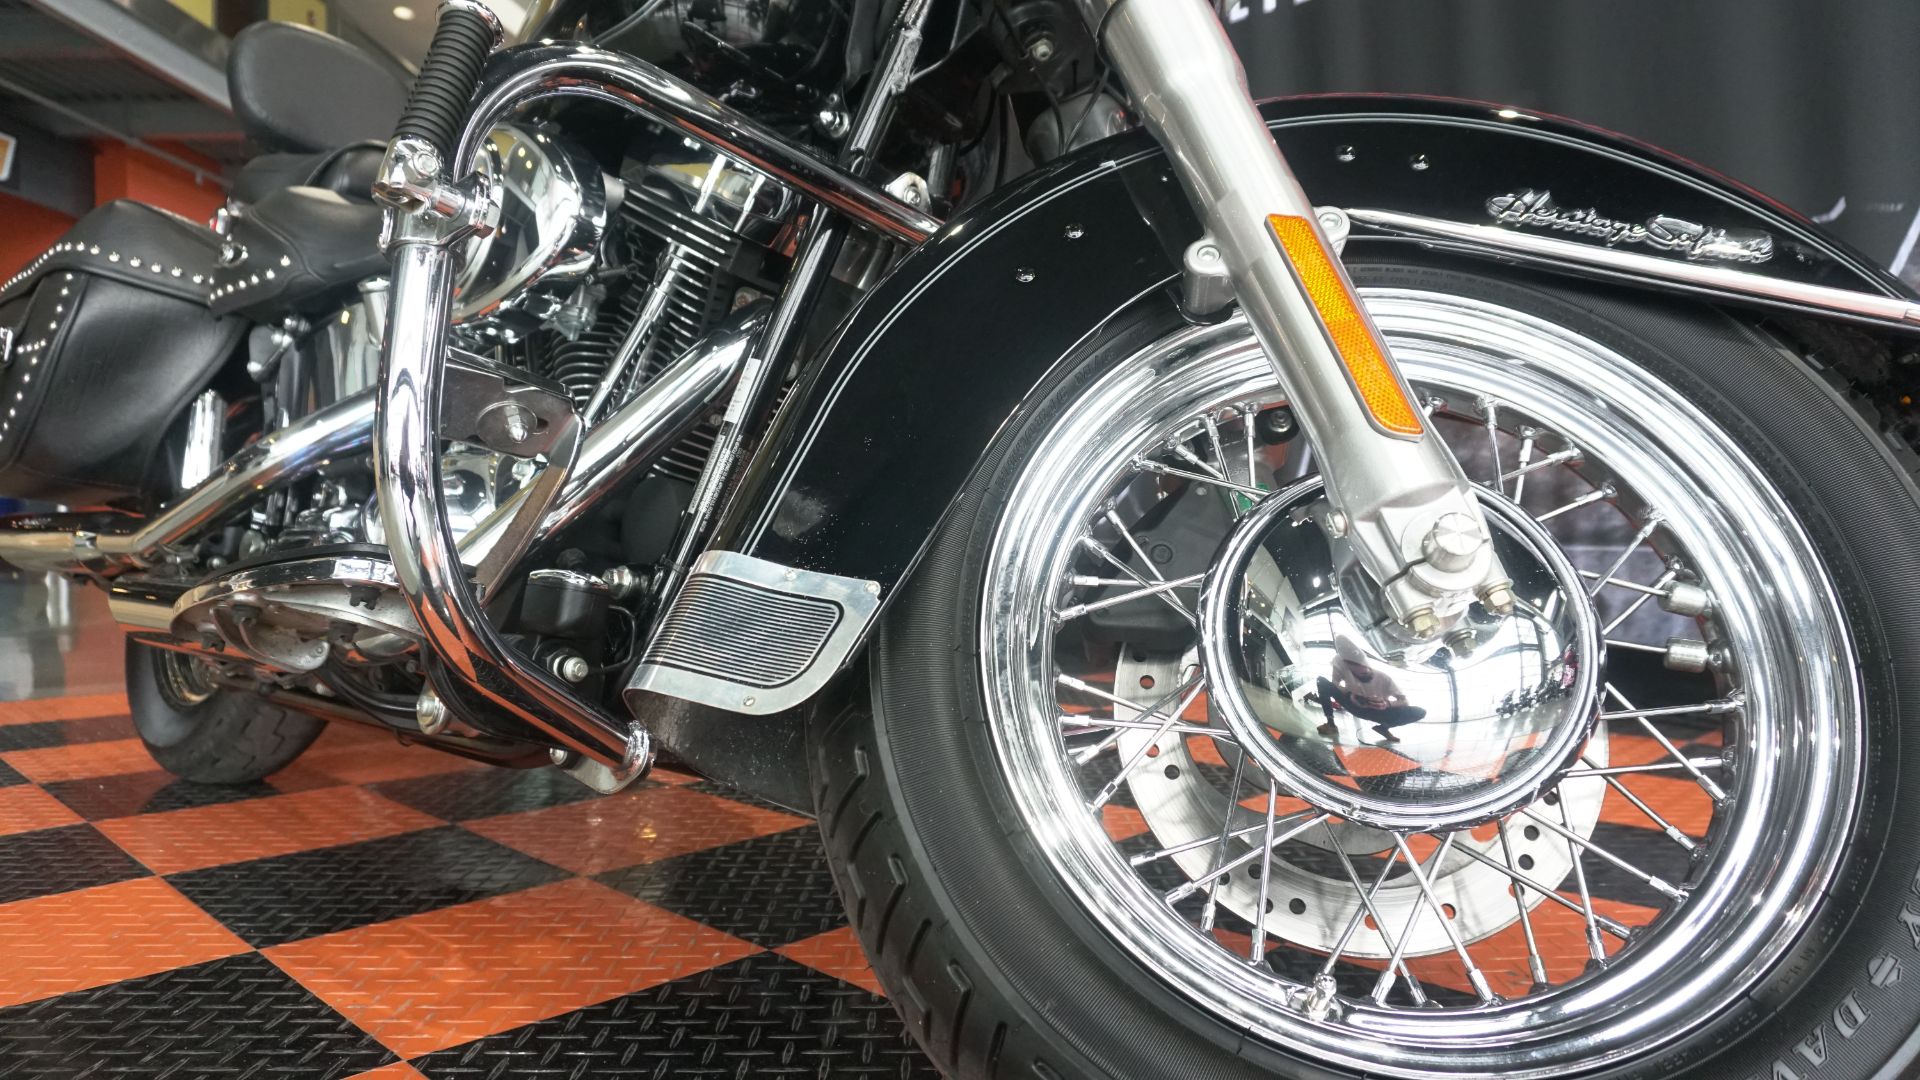 2006 Harley-Davidson Heritage Softail® in Shorewood, Illinois - Photo 4